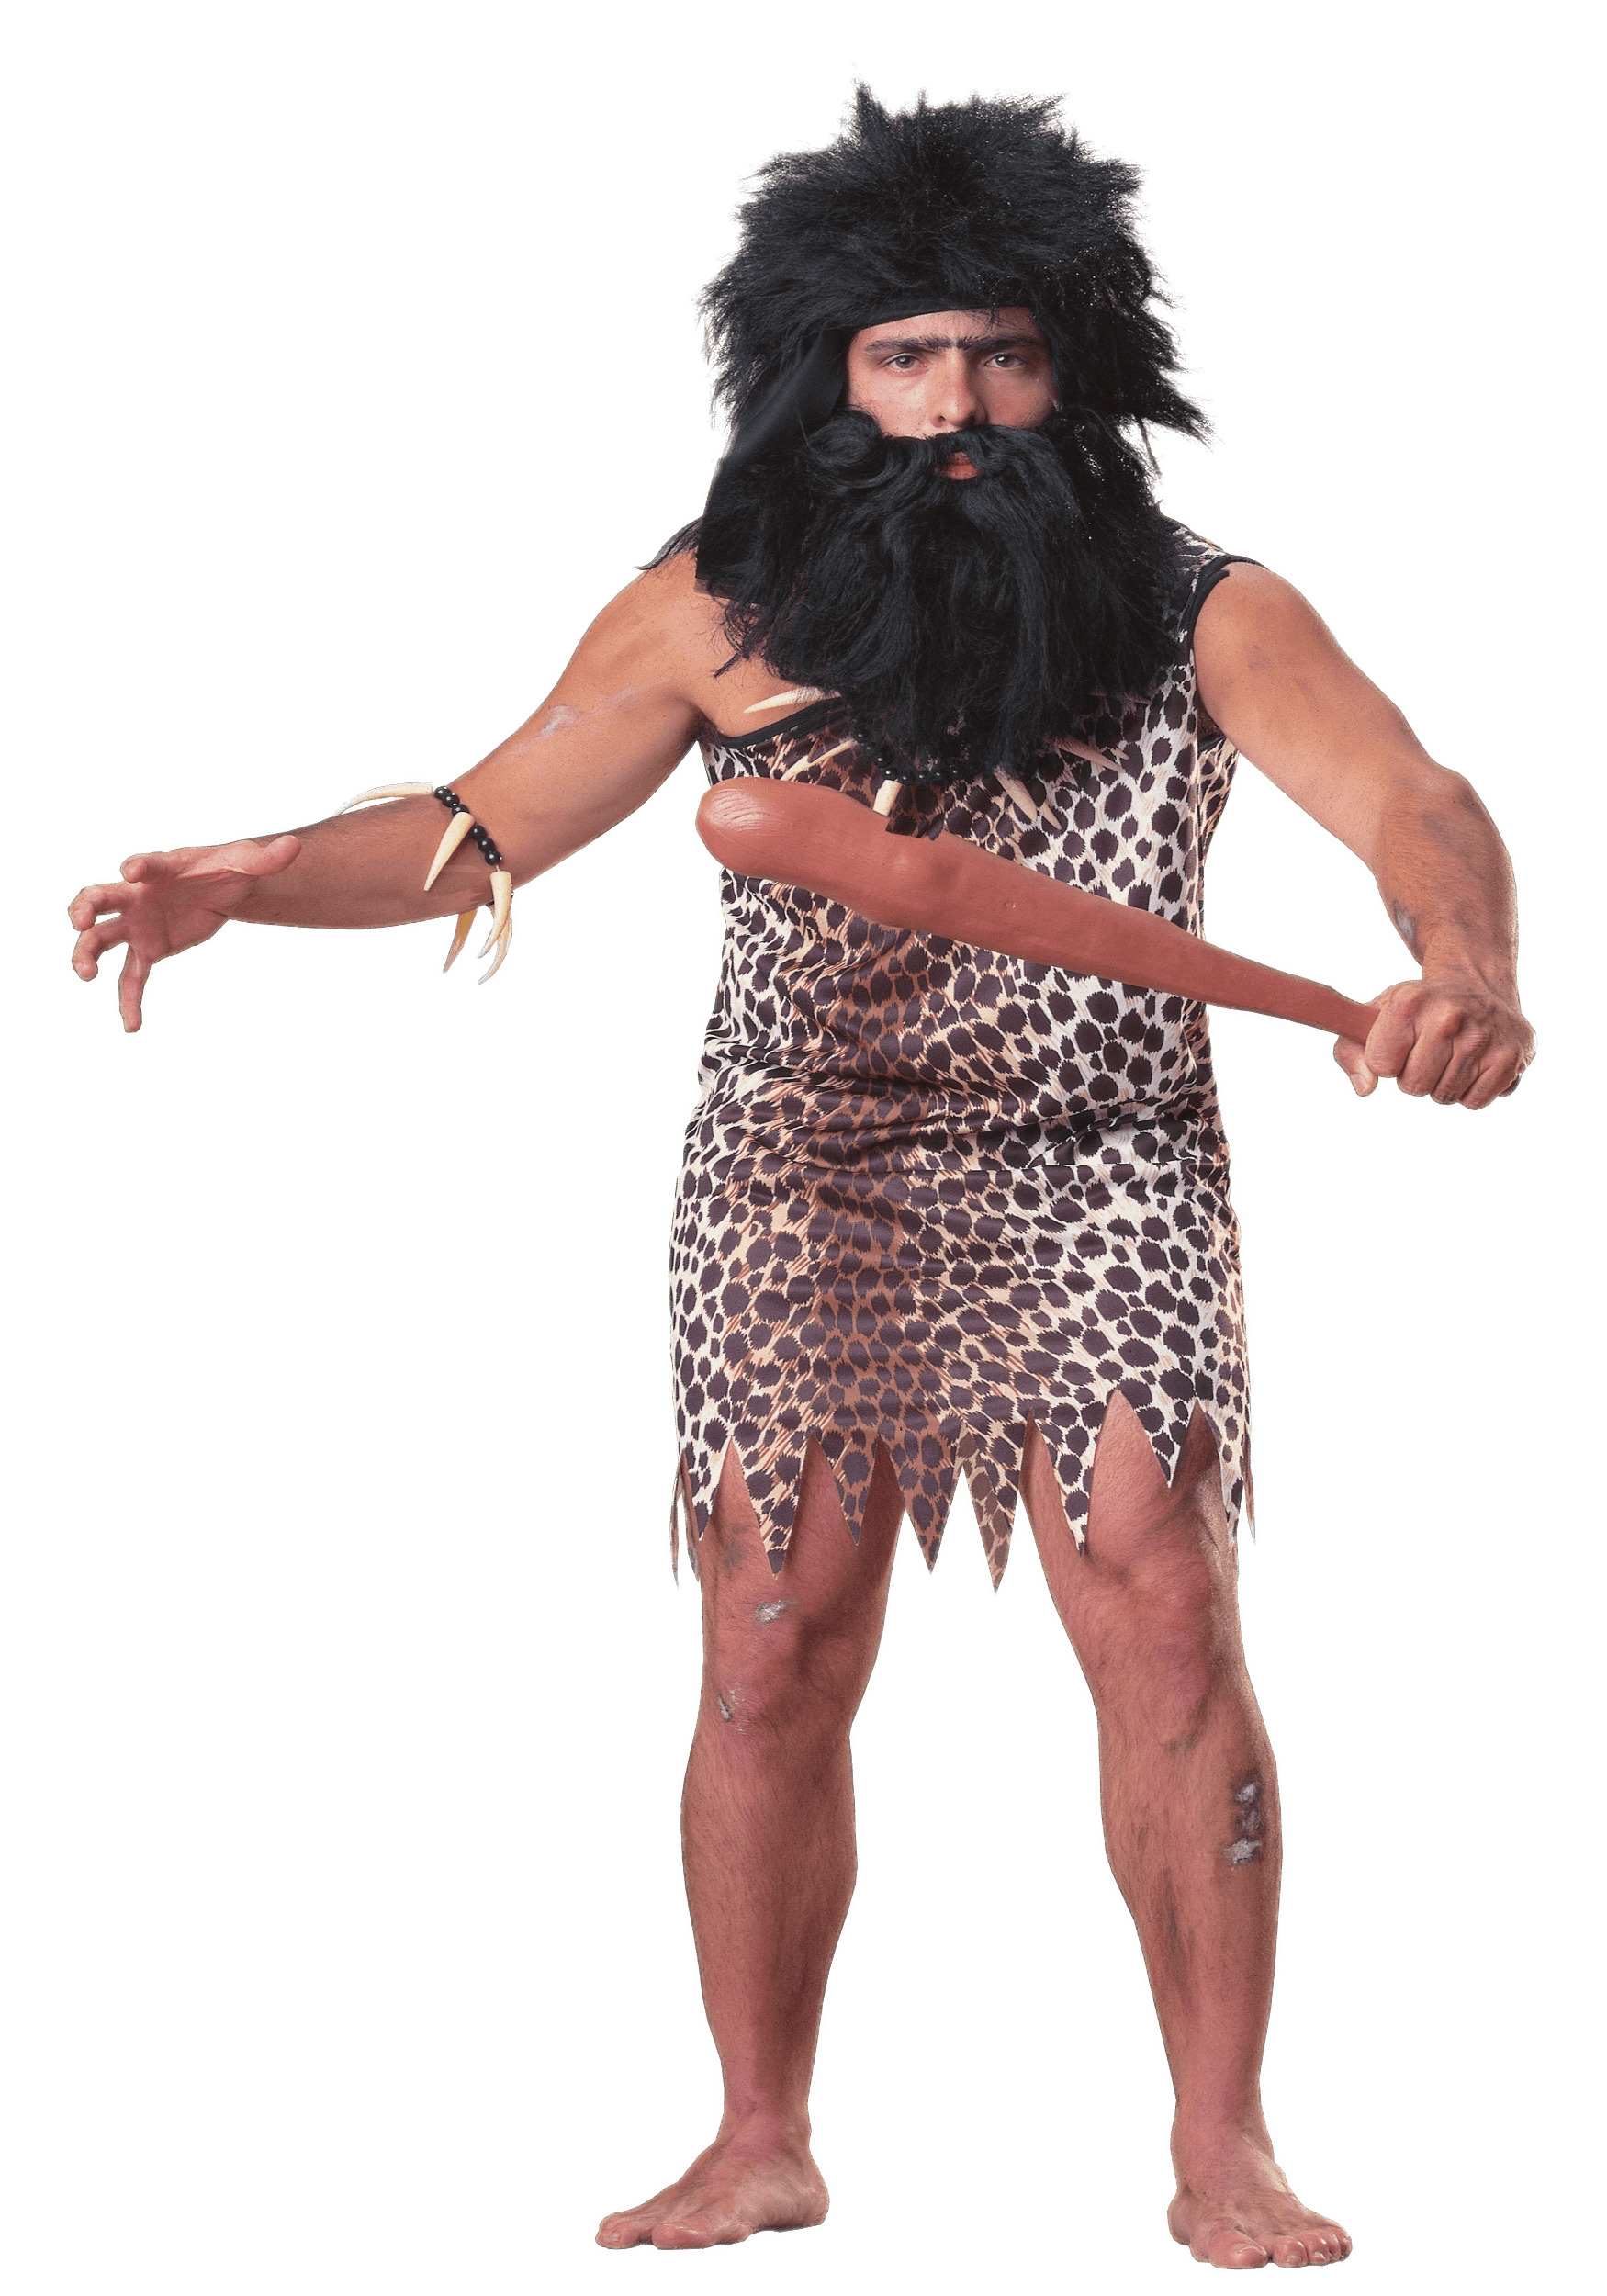 Caveman Costume icons